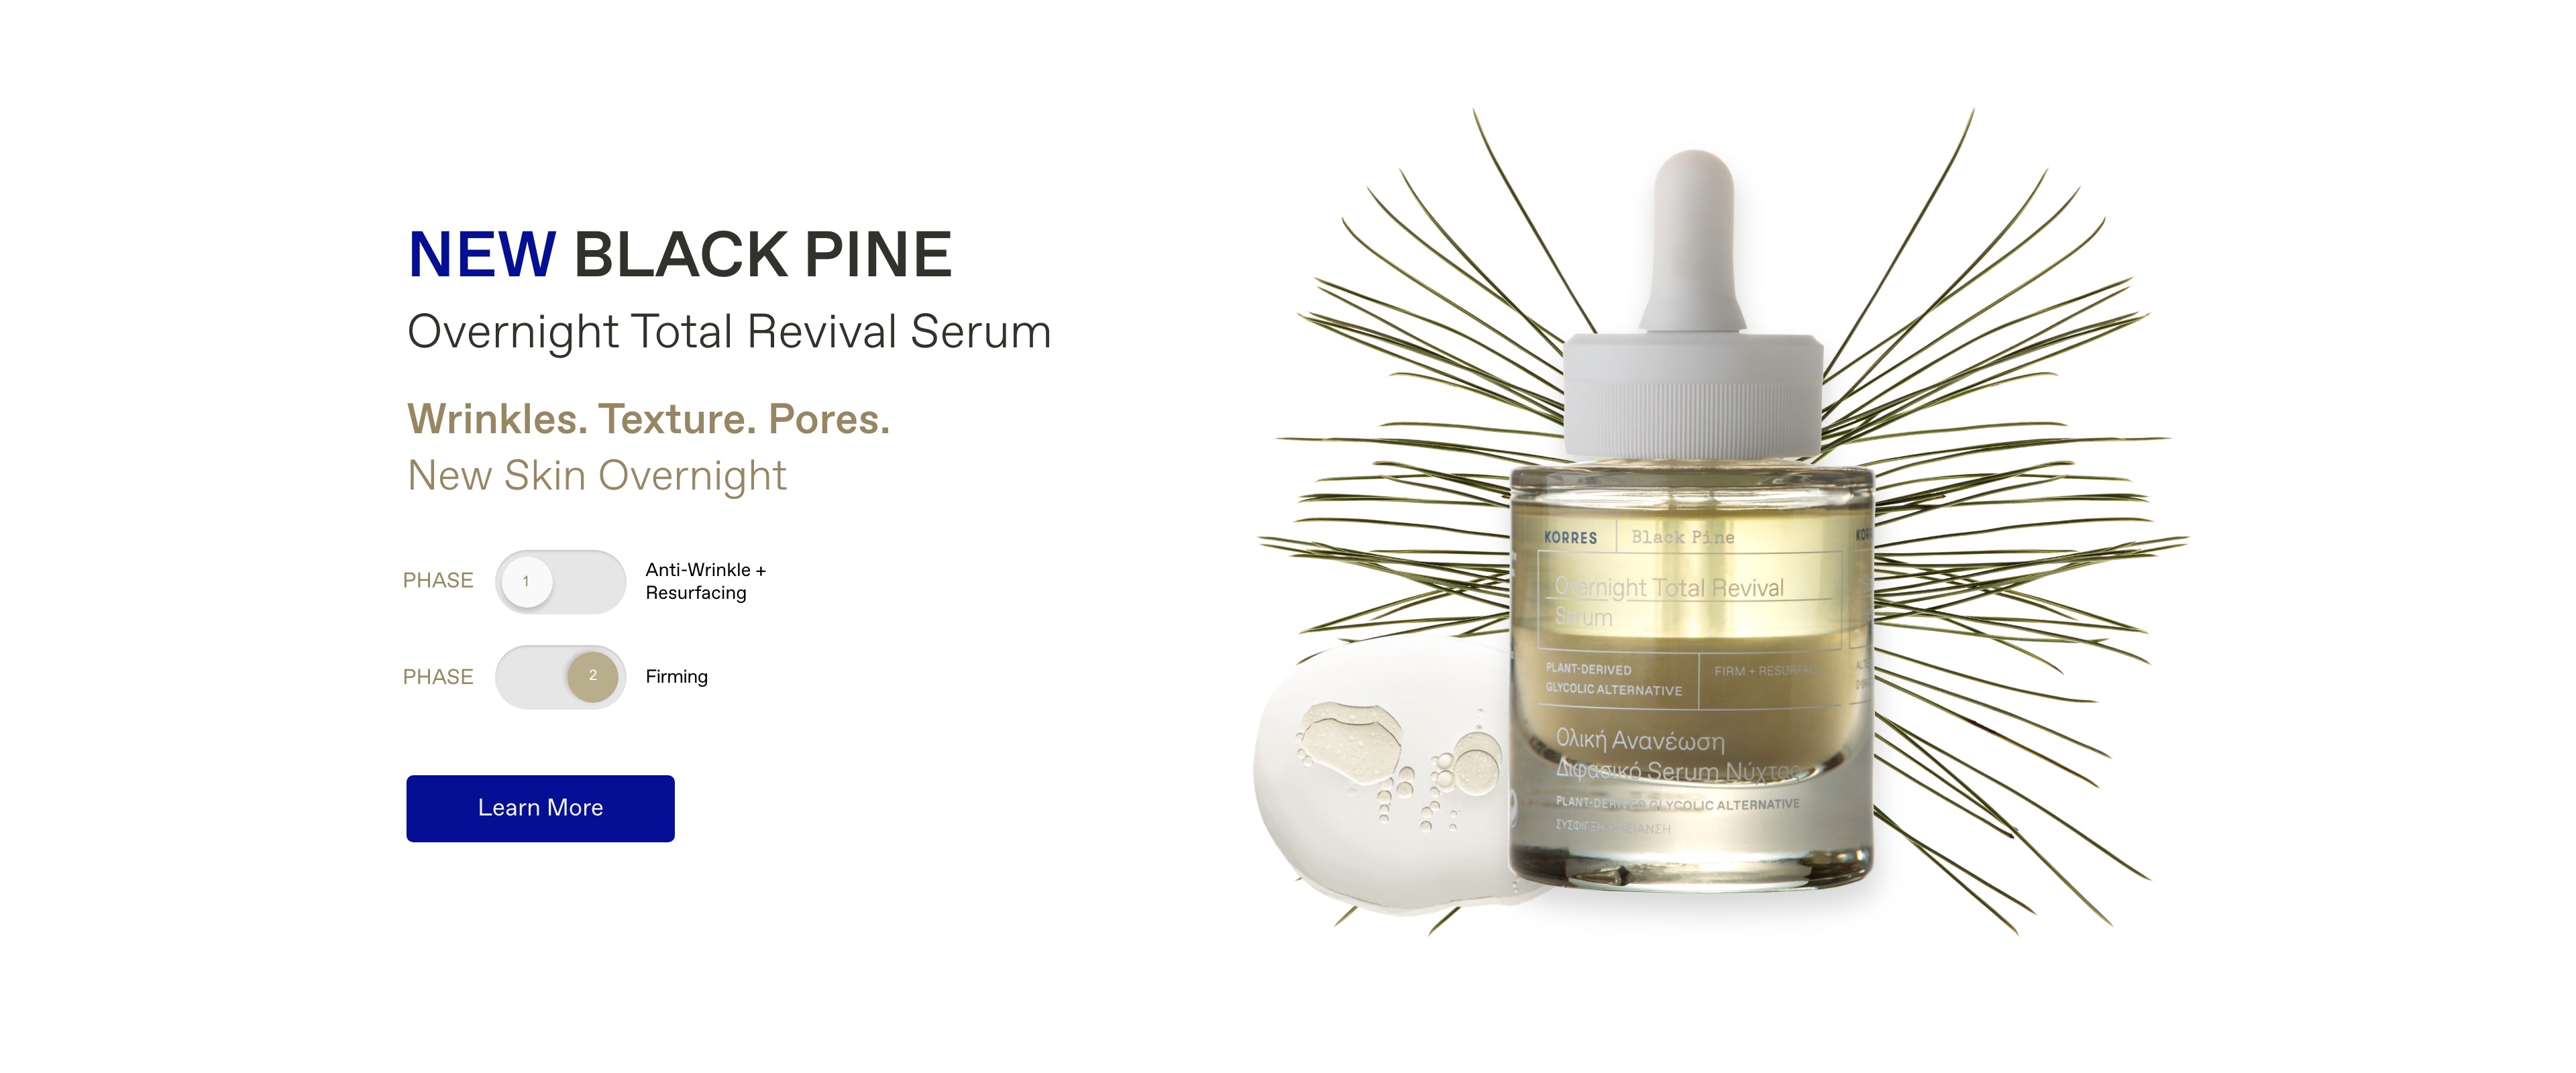 NEW BLACK PINE - Overnight Total Revival Serum - Wrinkles. Texture. Pores. - New Skin Overnight